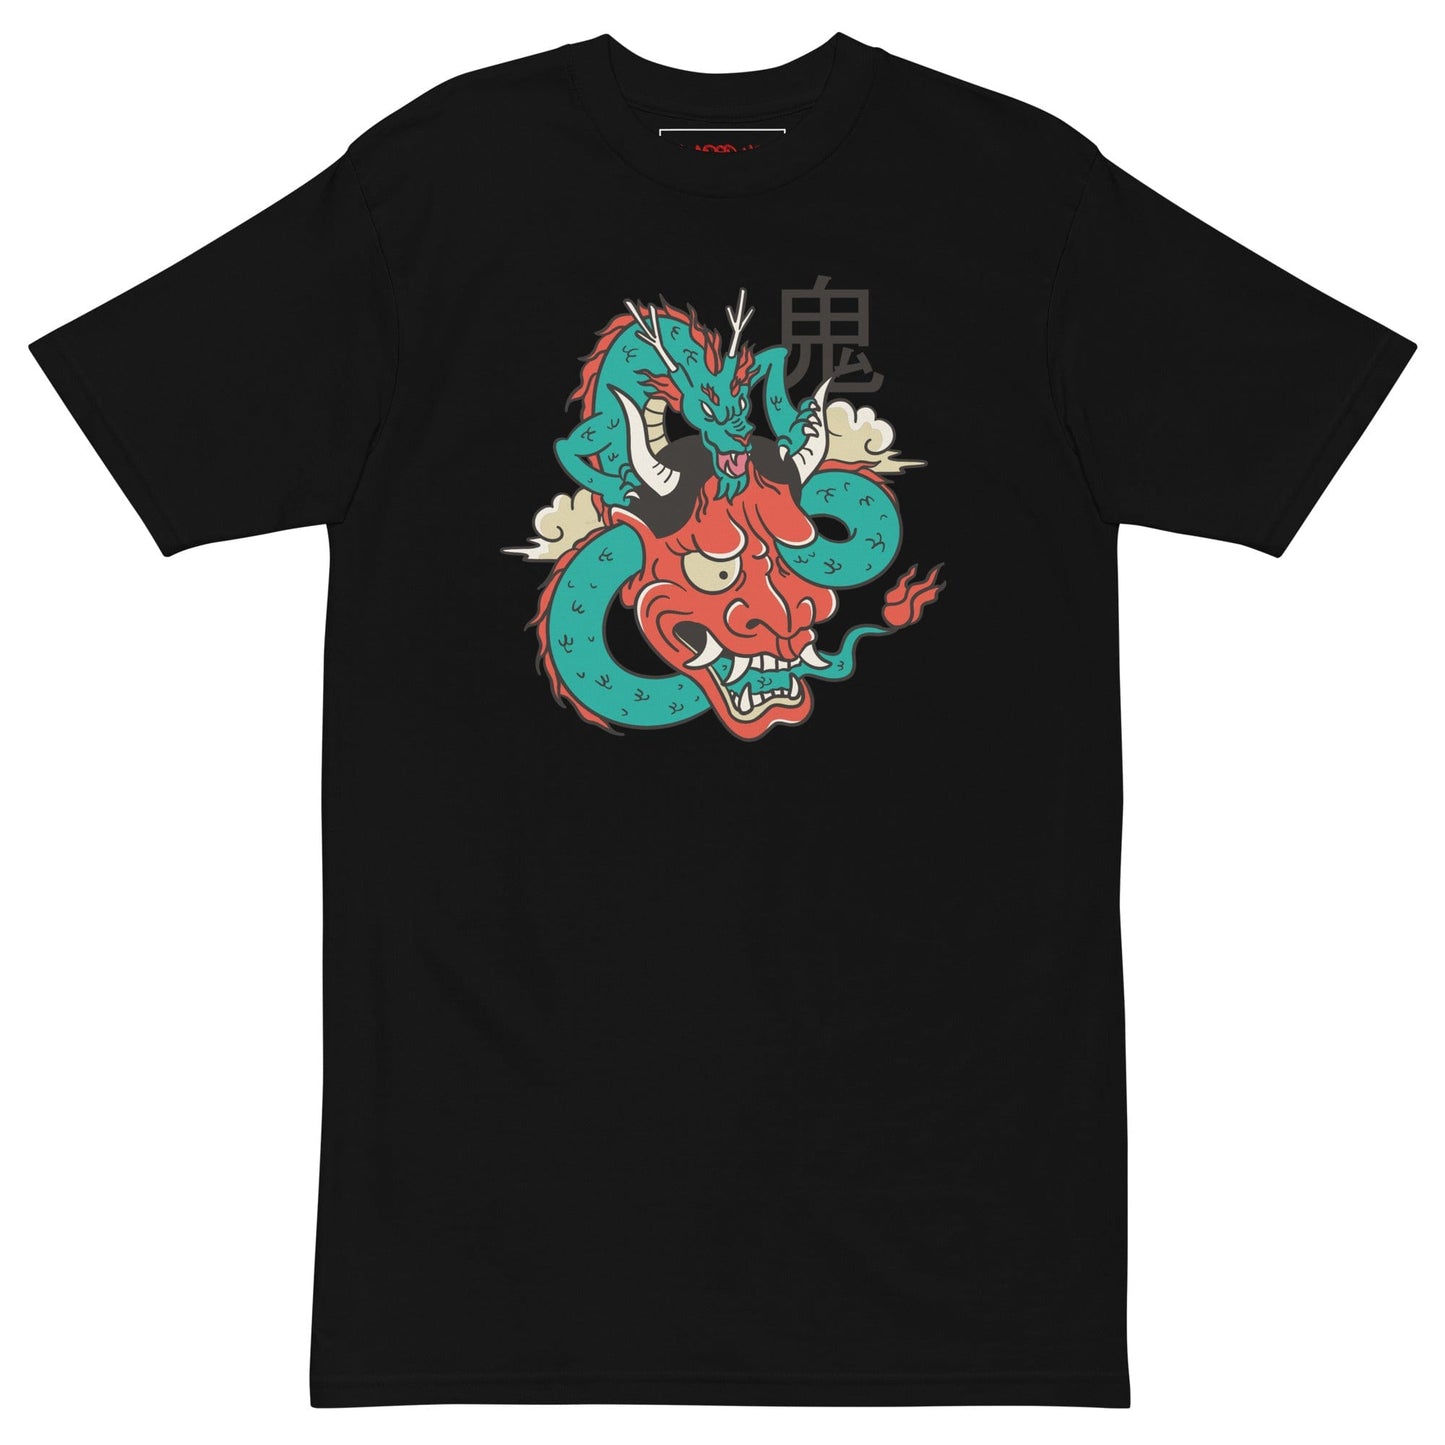 Dragon t-shirt